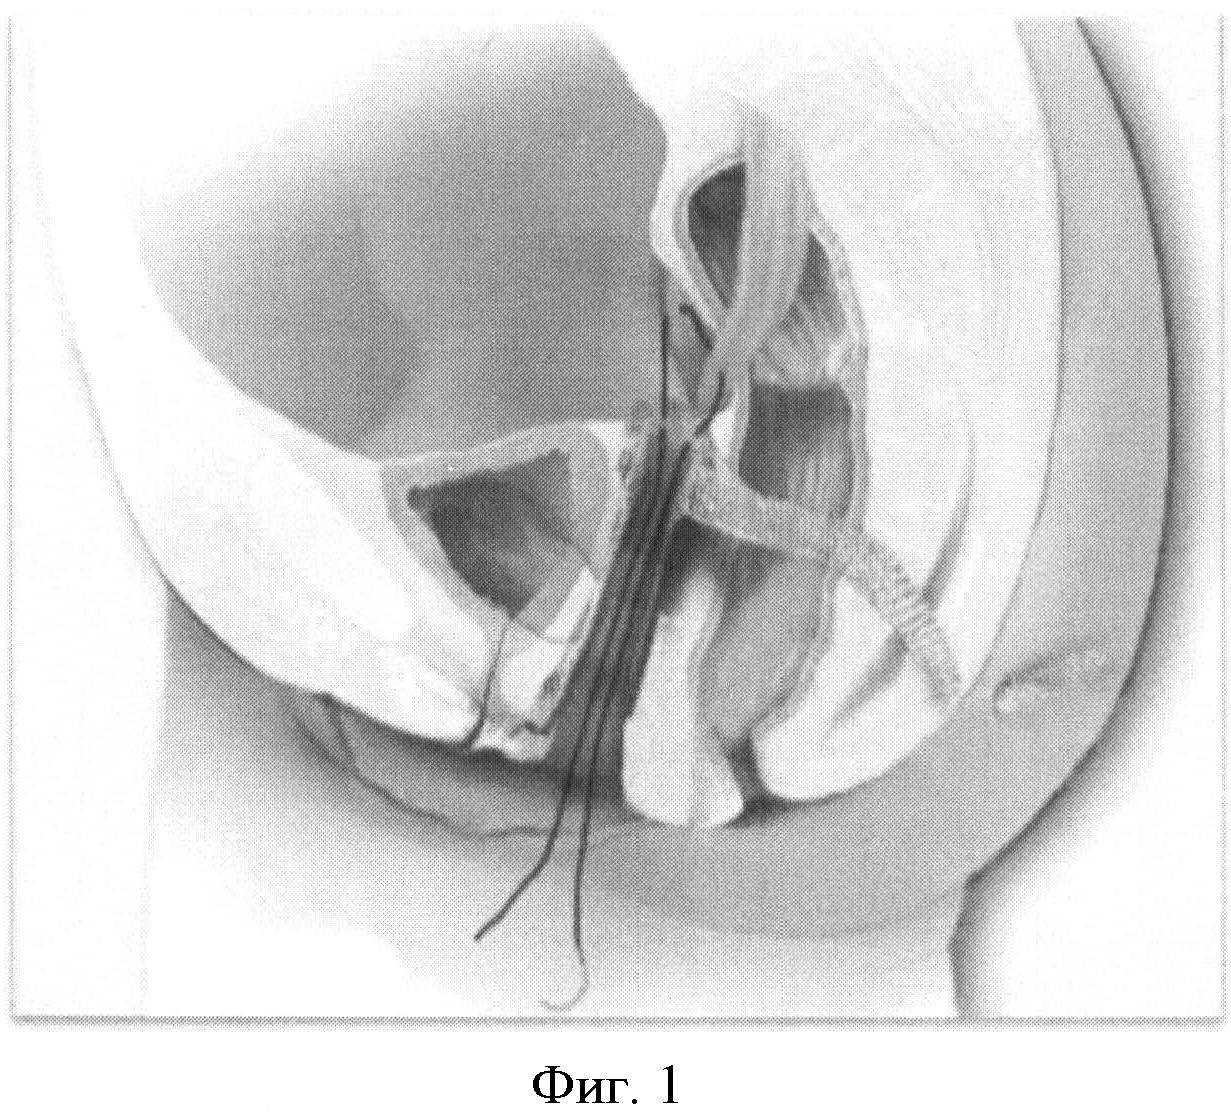 Опущение матки (выпадение) - степени 1, 2, 3 и 4, фото и лечение